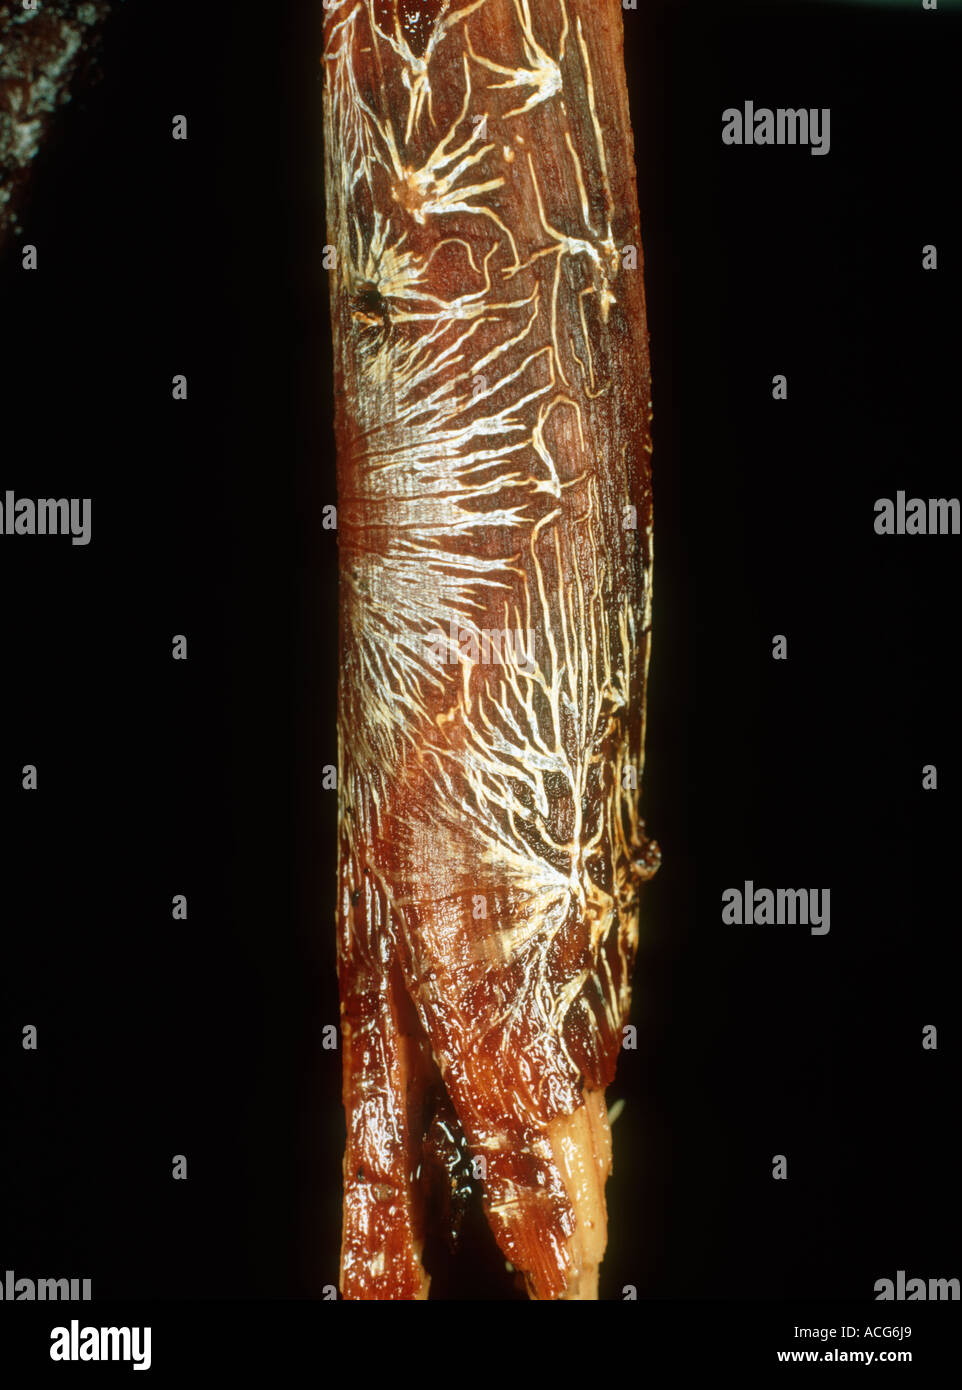 Rinde entfernt, um schwarze Wurzelfäule Rosellinia Pepo Stern geformte Rhizomorphstränge Typ Myzel zeigen Stockfoto